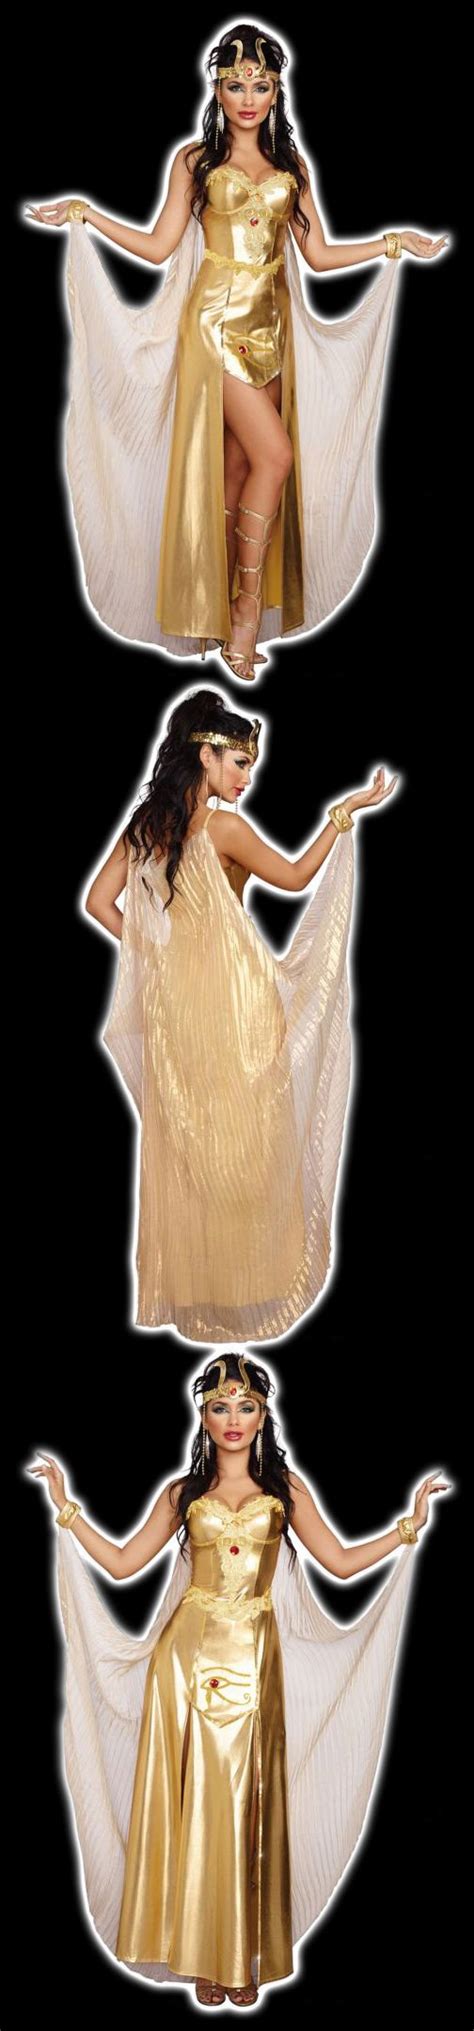 hathor egyptian goddess of love and fertility adult costume secret of